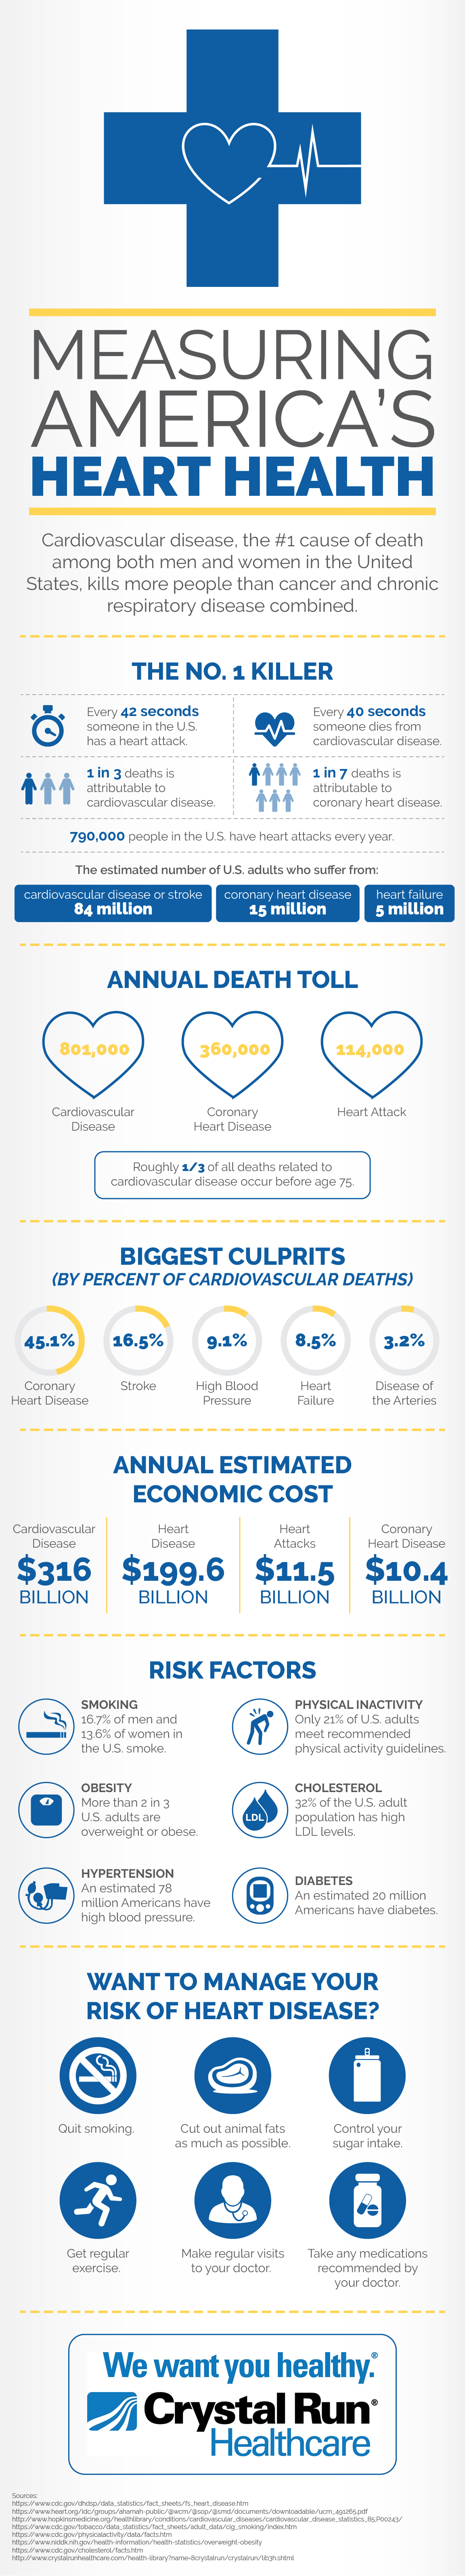 Measuring America’s Heart Health Infographic